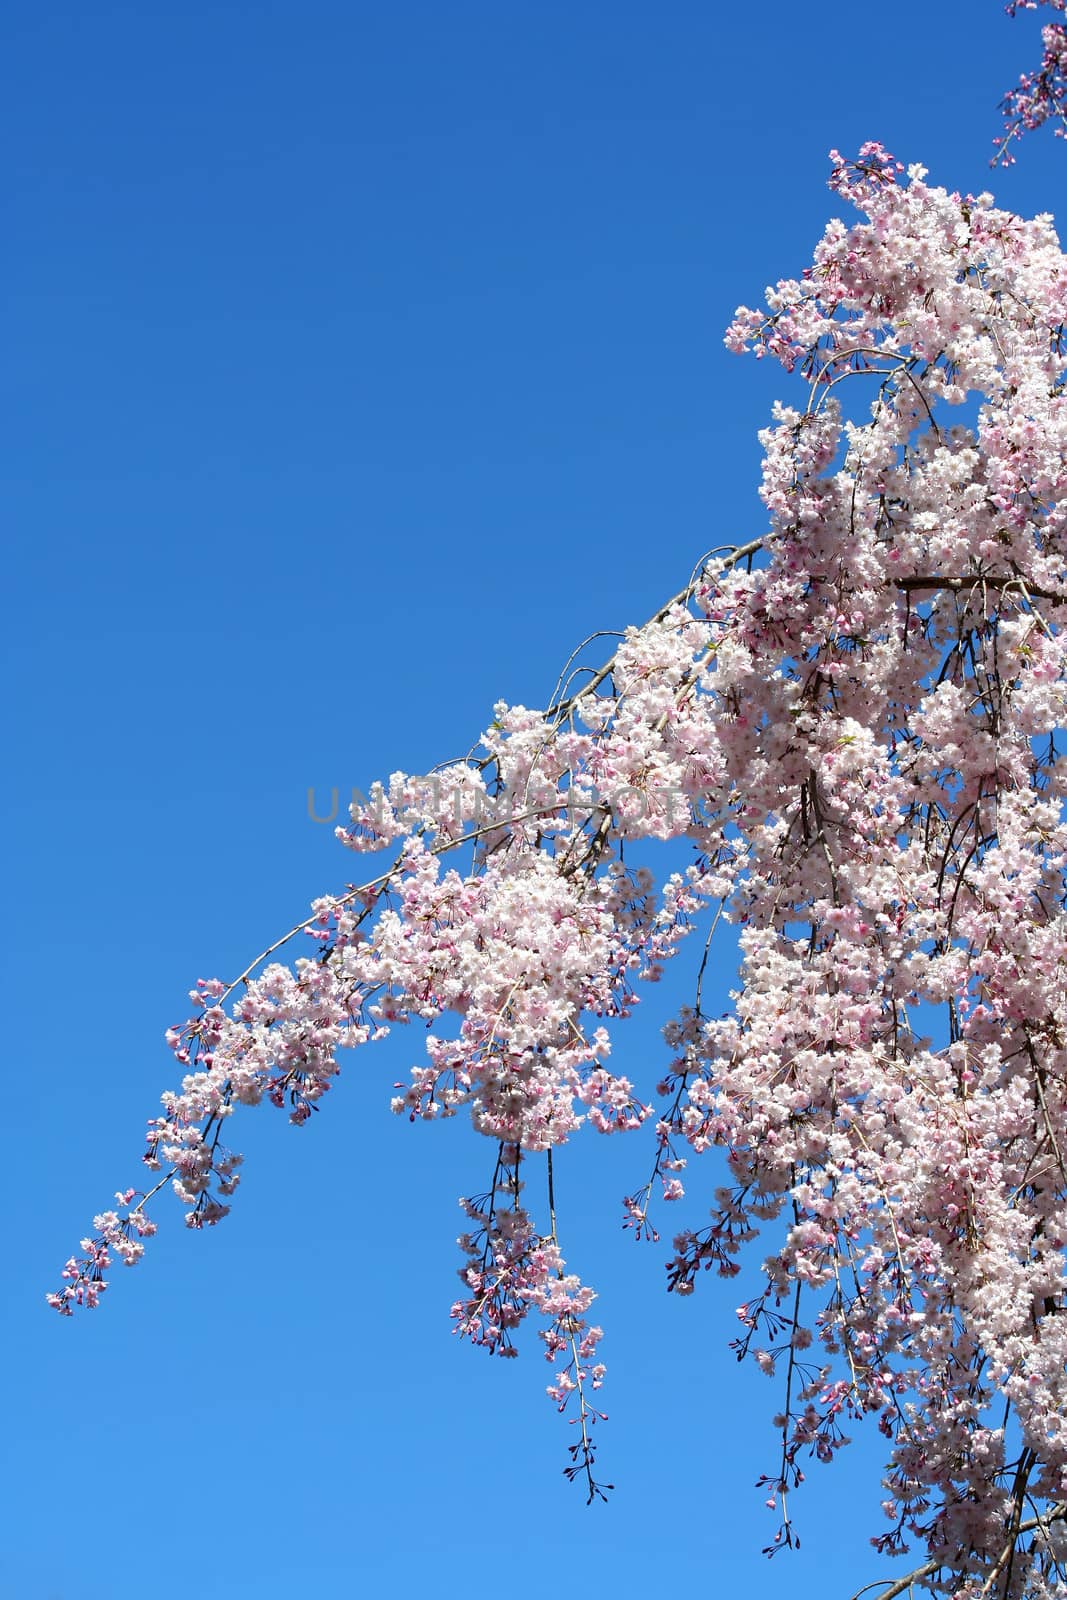 Some Cherry blossoms against blue sky